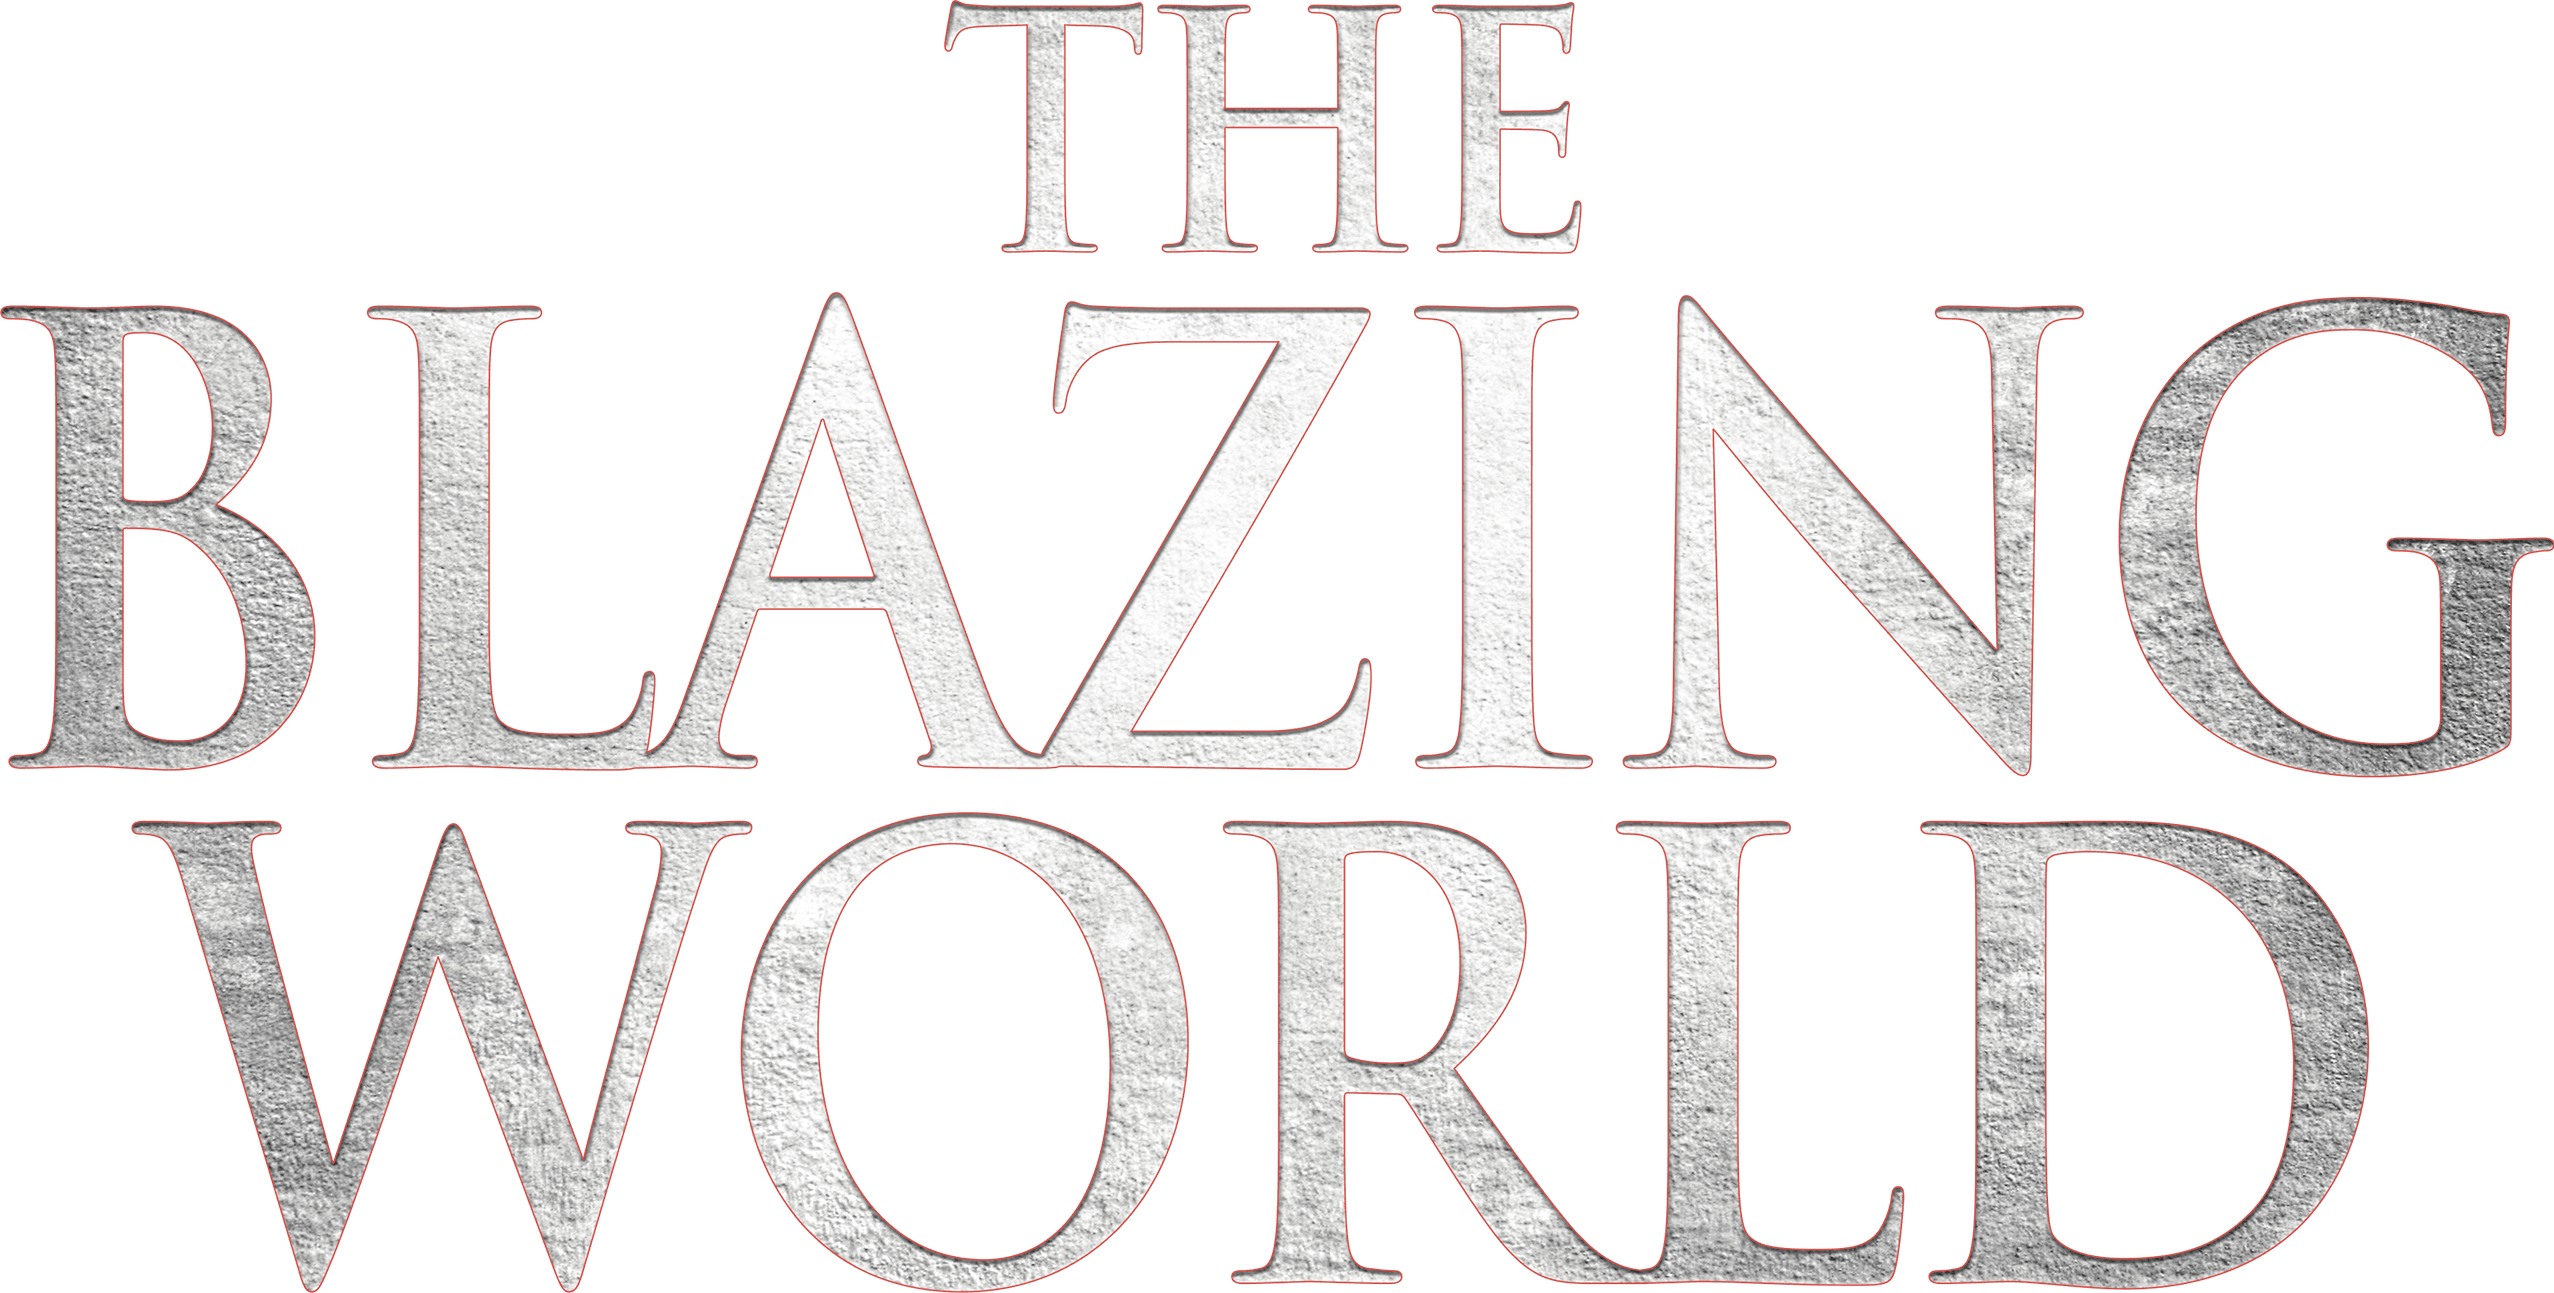 The Blazing World logo